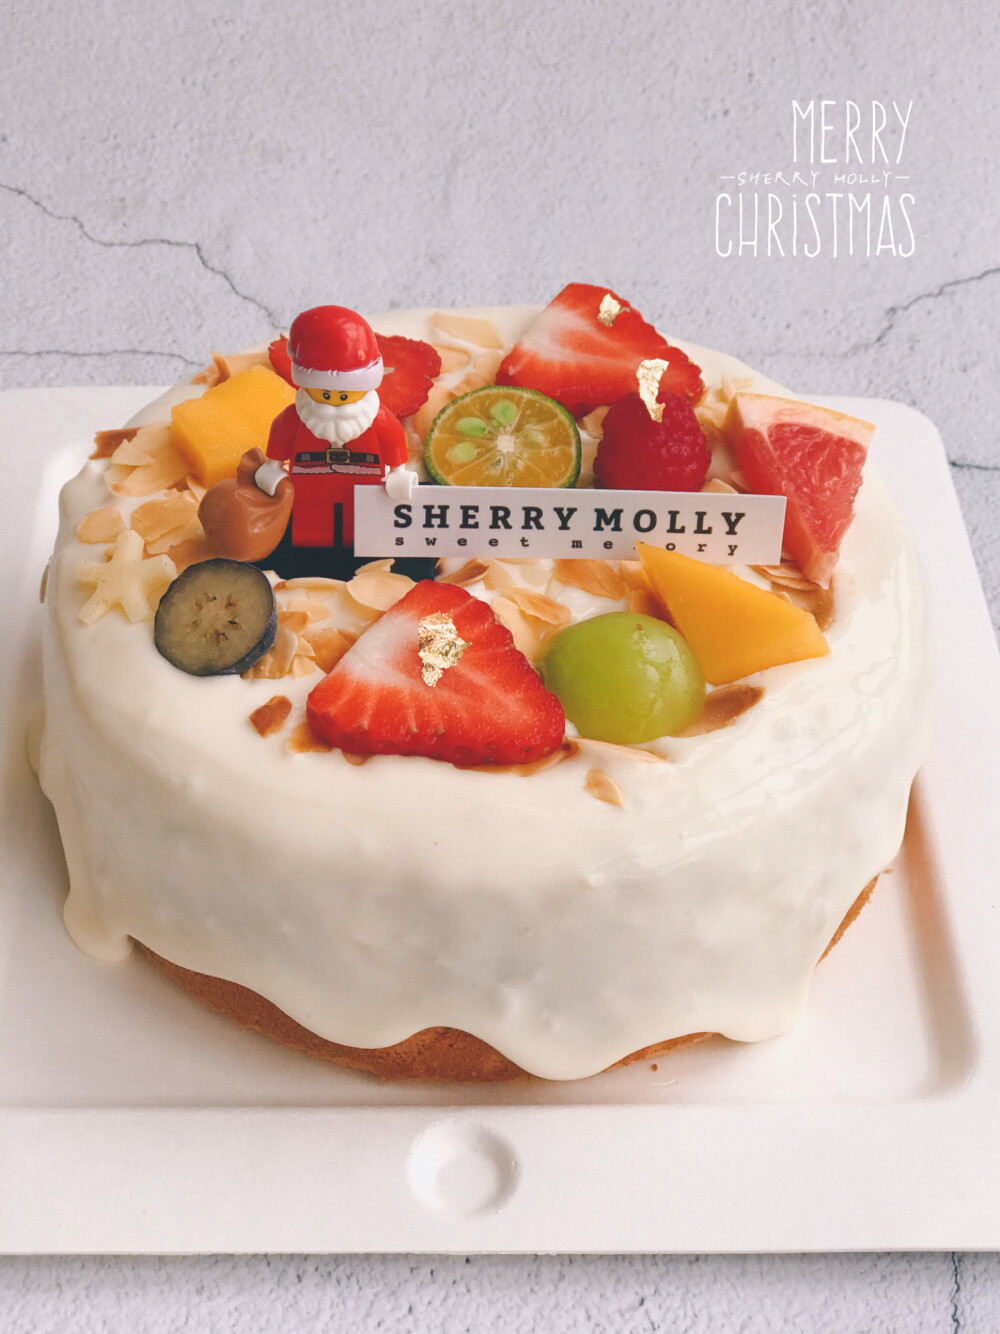 #SHERRY Molly家の下午茶#—『圣诞爆浆cake』圣诞节限定款爆浆cake都做完准备出发啦 今天一定是甜甜哒